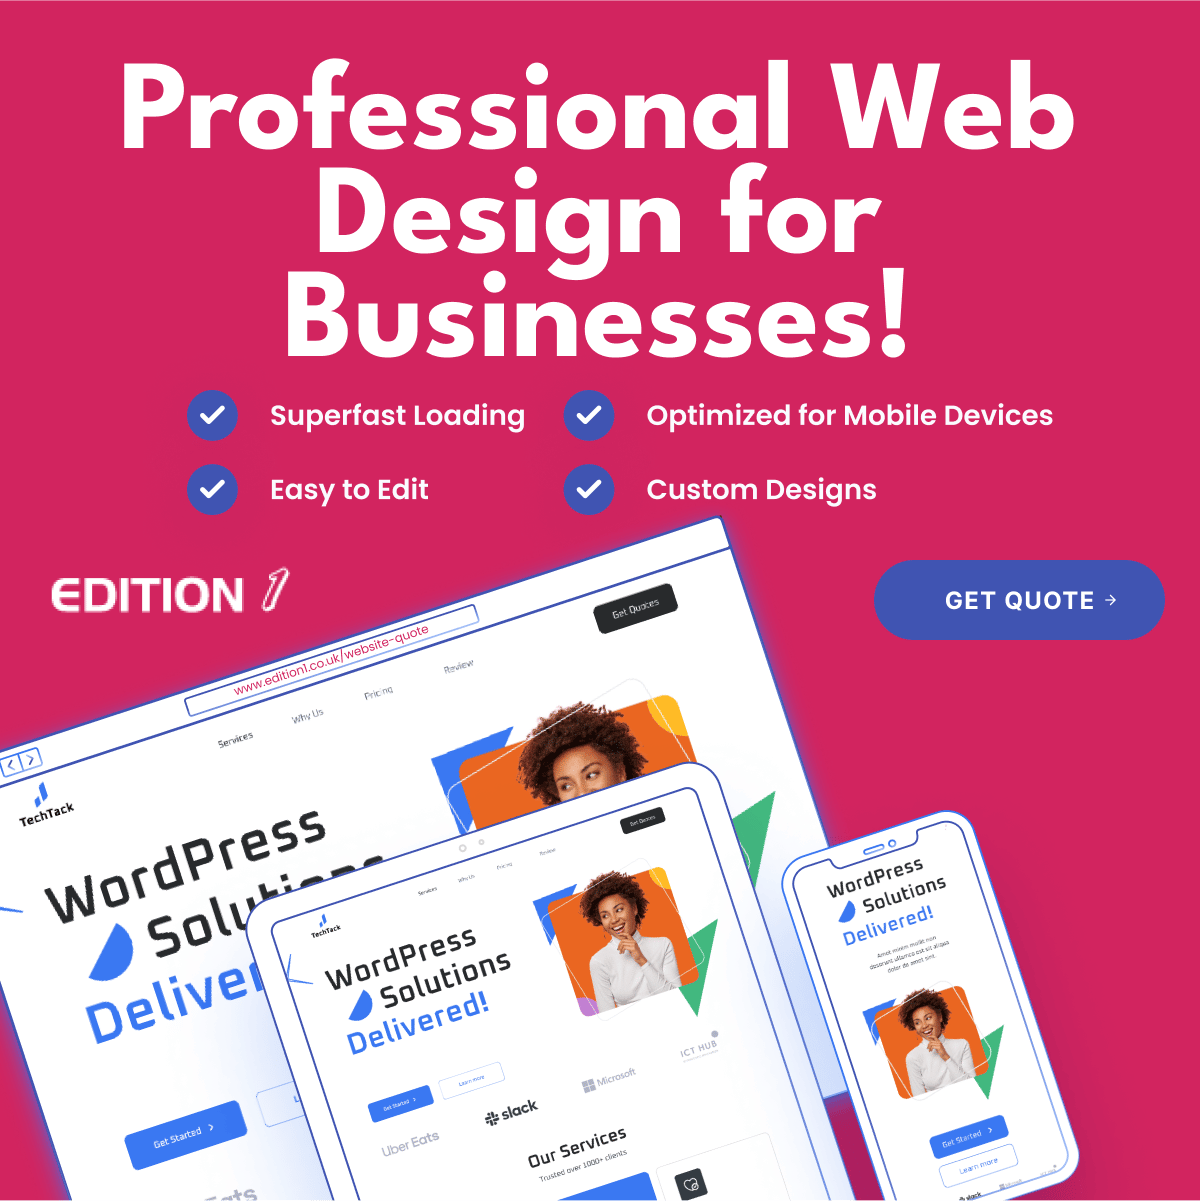 Pro Web Design for Businesses